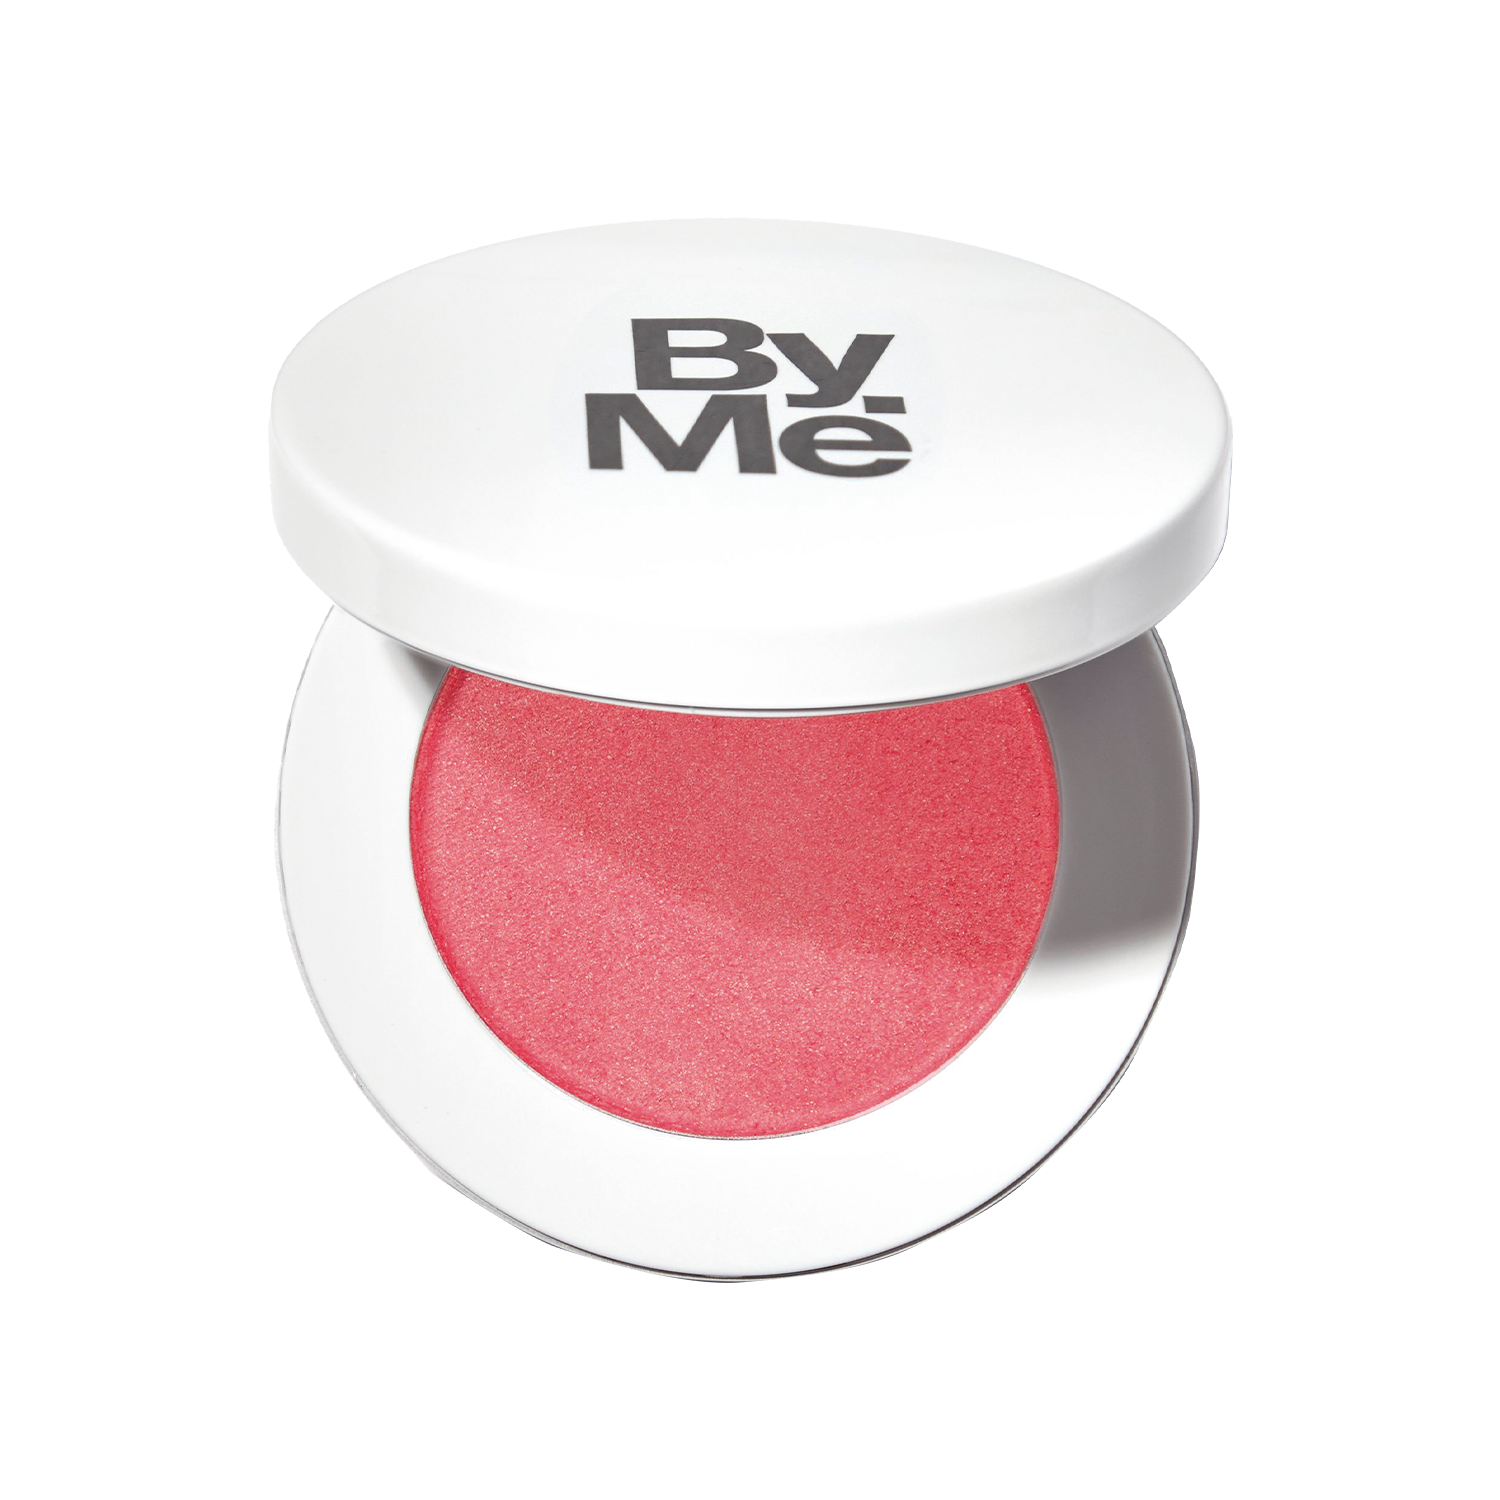 MyBeautyBrand Pure Power Blush in Miki Pink 505 MyBeautyBrand Pure Power Blush in Miki Pink 505 1